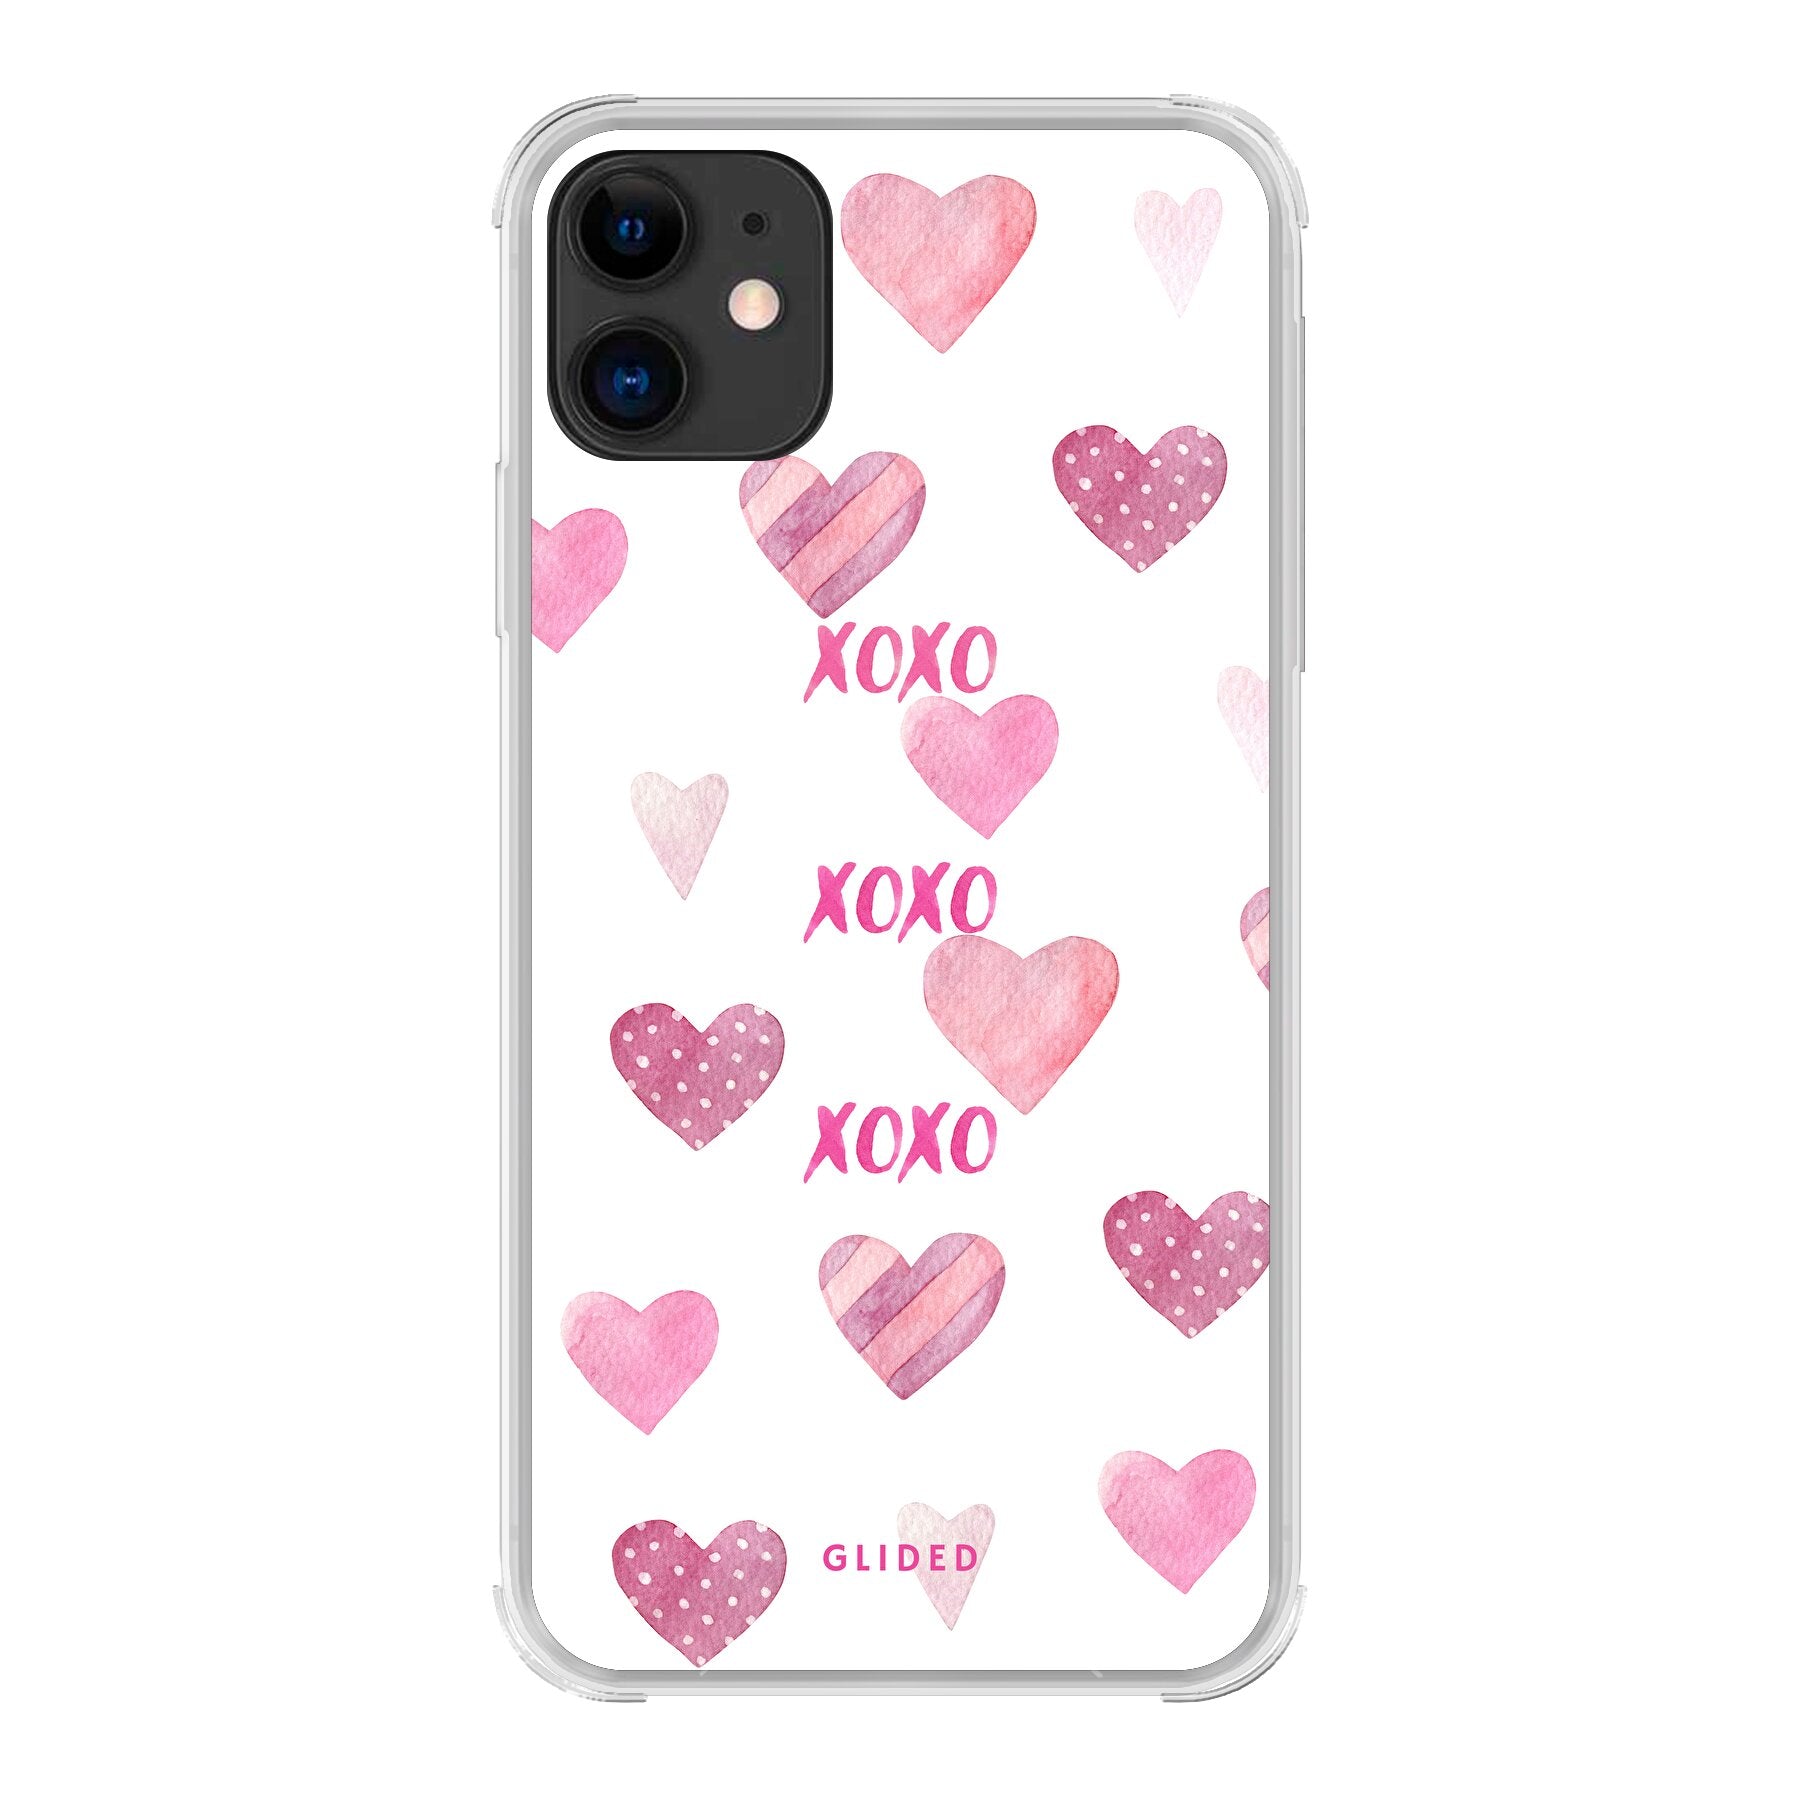 Xoxo - iPhone 11 - Bumper case